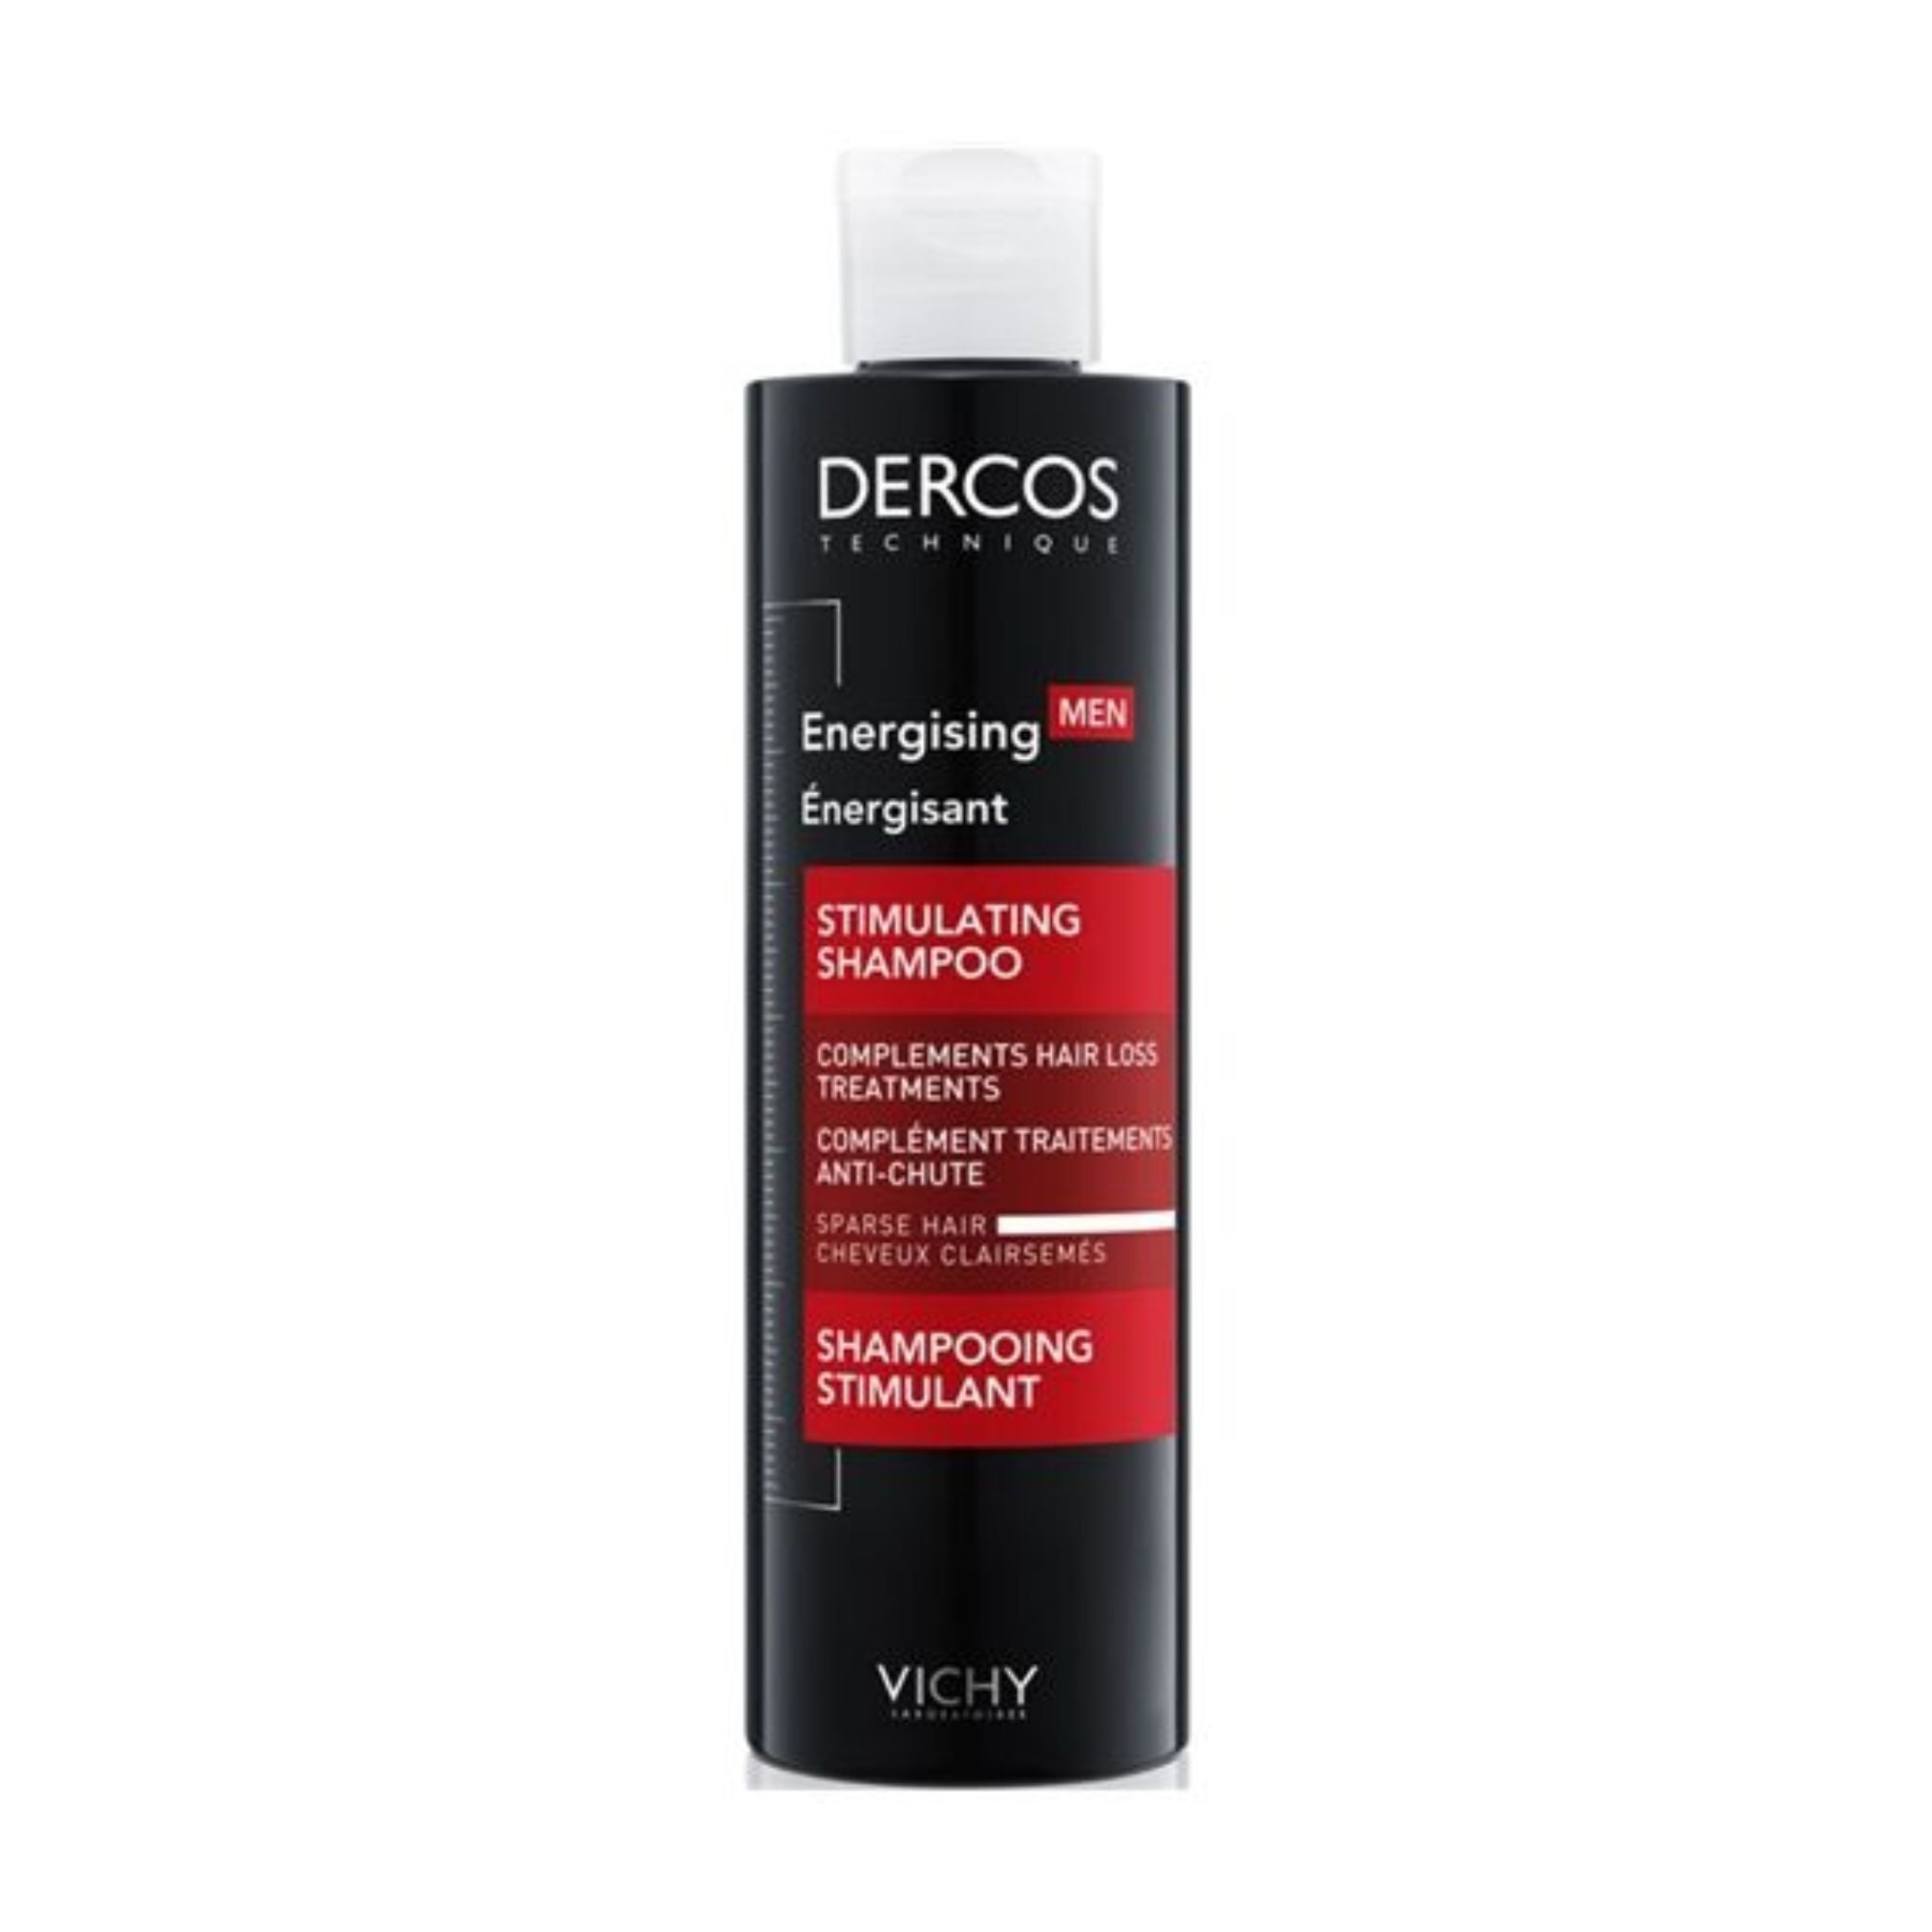 Vichy Dercos Technique Energising Men Stimulating Shampoo 200ml